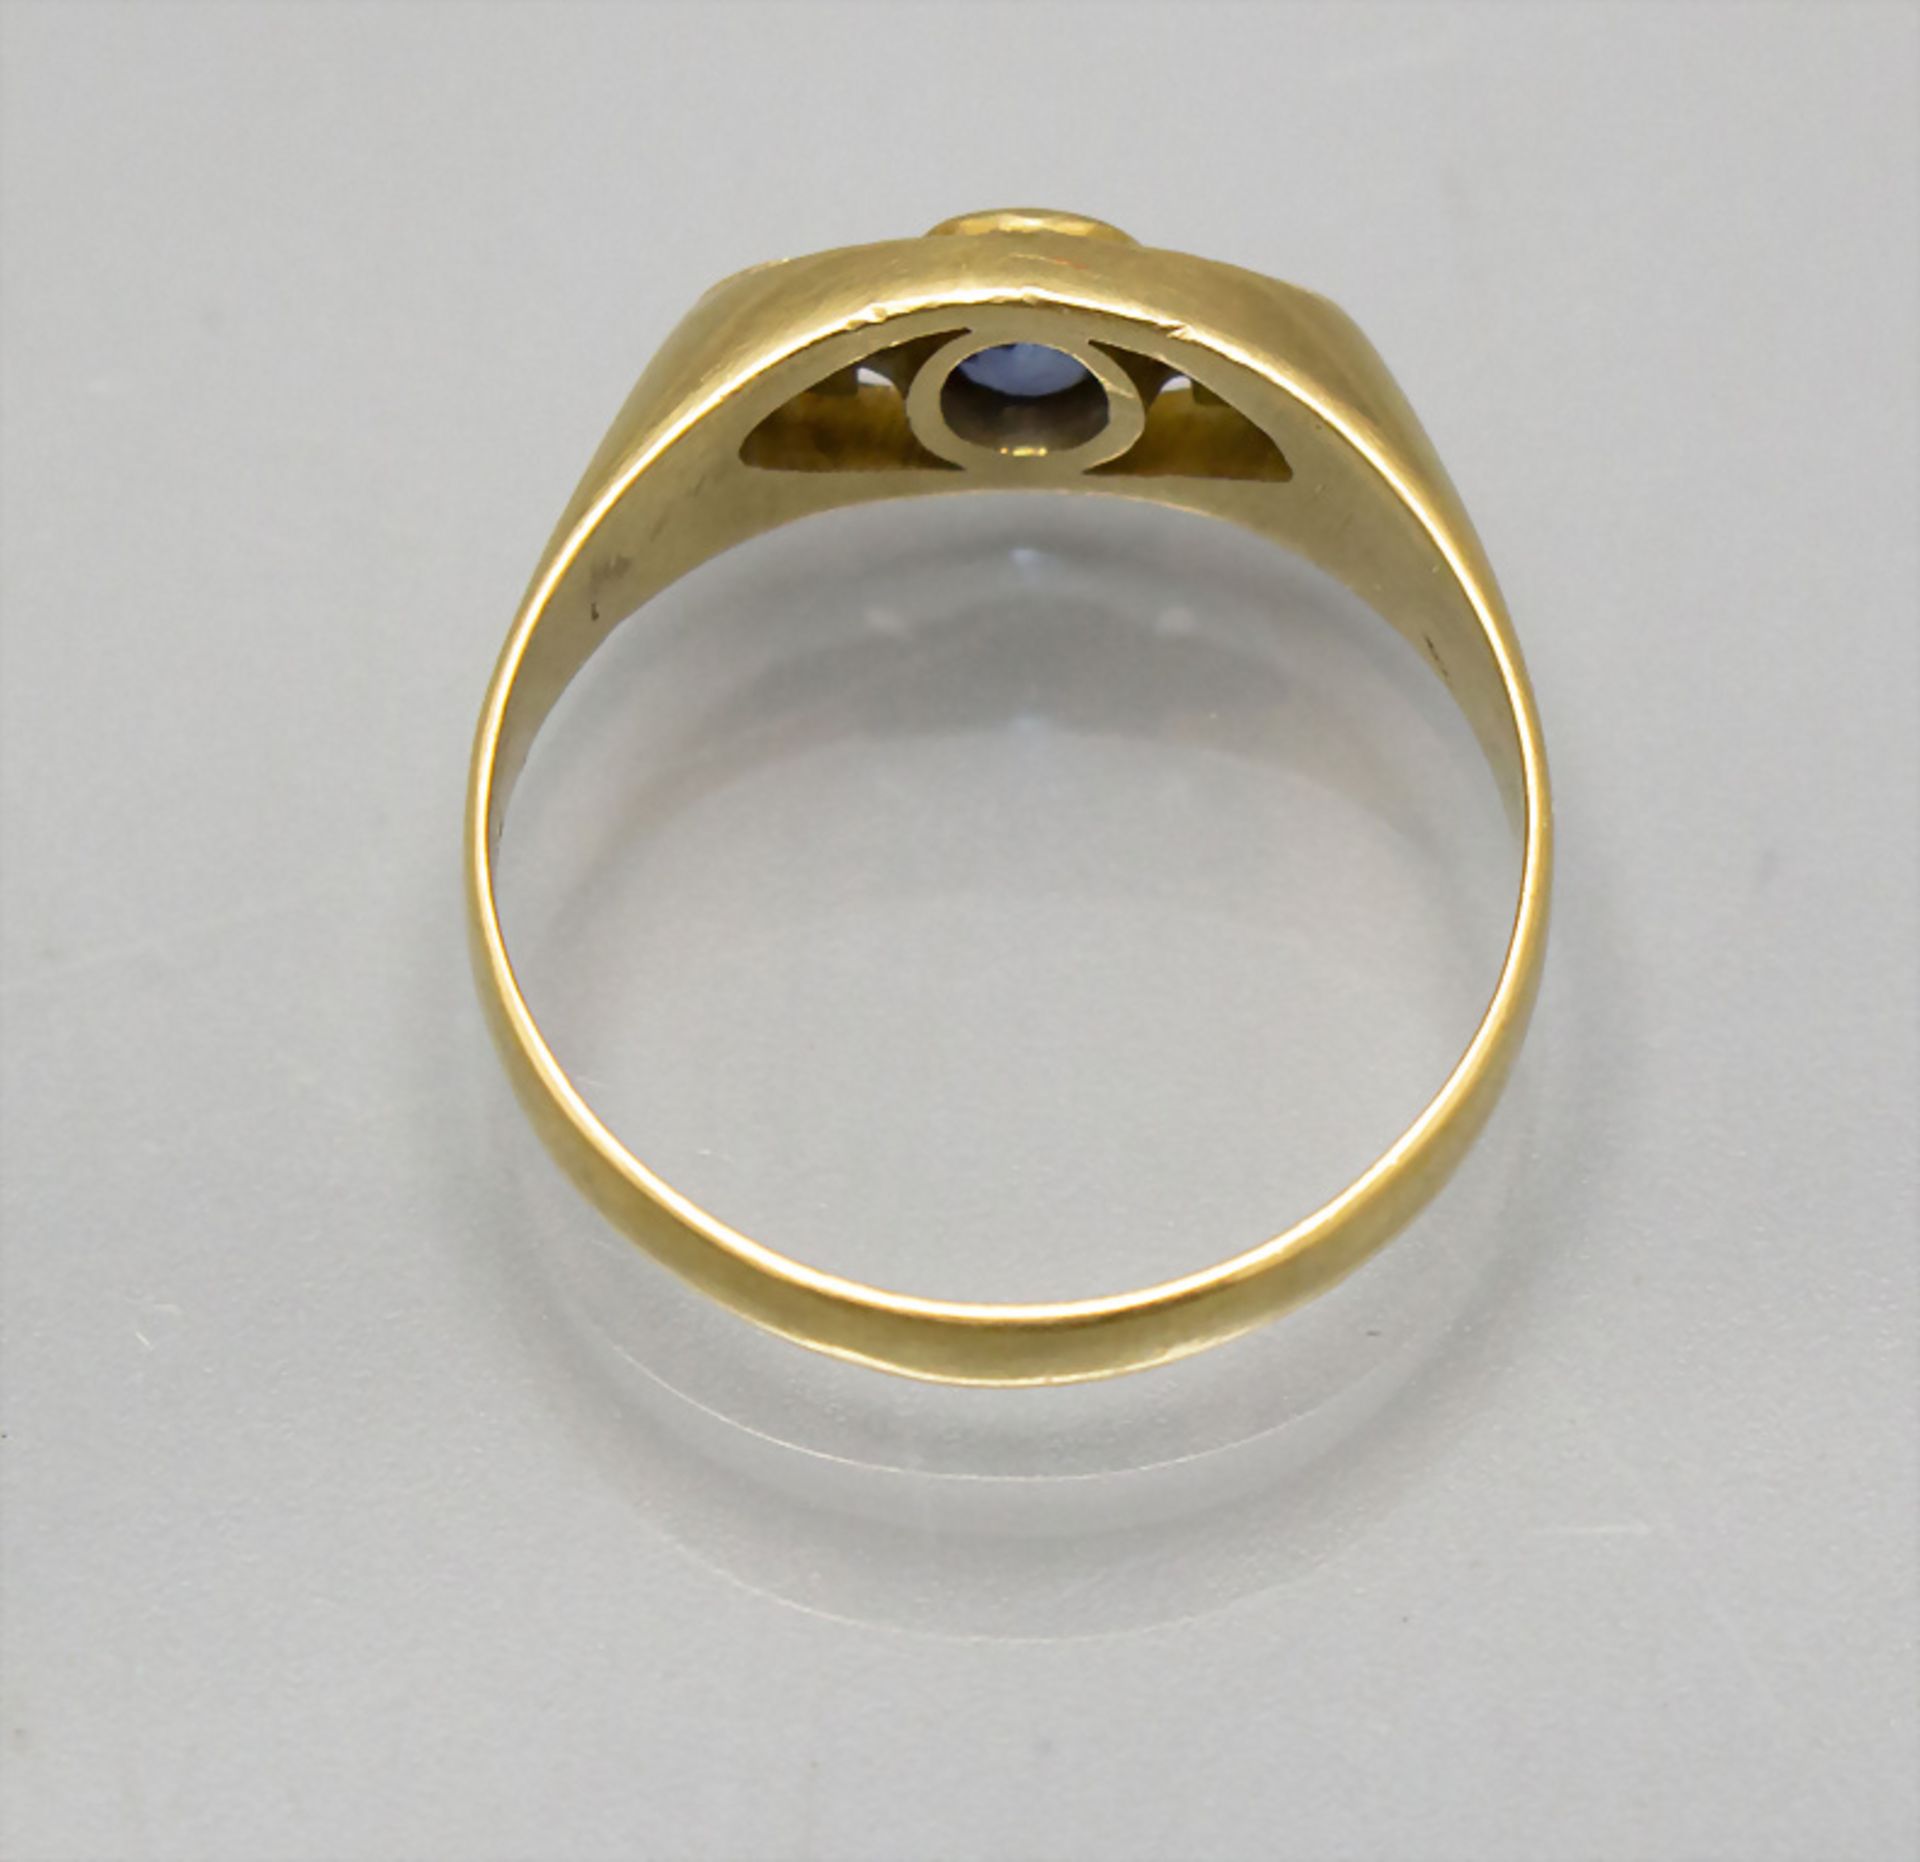 Damenring mit Saphir und Brillanten / A ladies 18 ct gold ring with diamonds and sapphire - Image 2 of 2